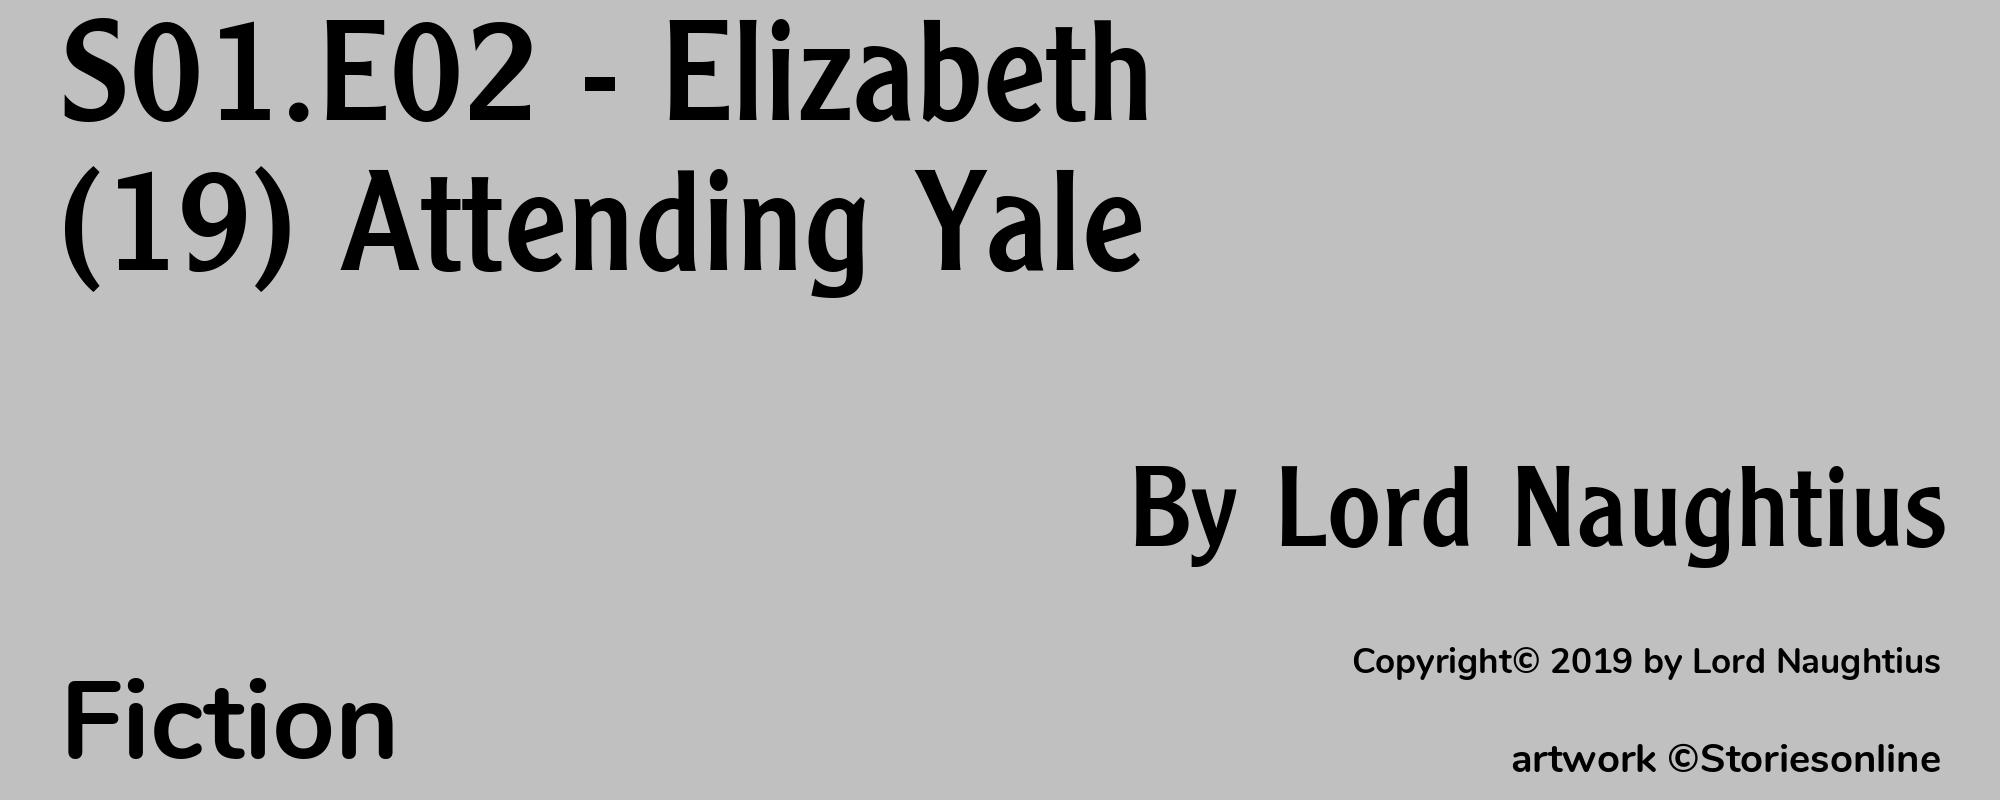 S01.E02 - Elizabeth (19) Attending Yale - Cover